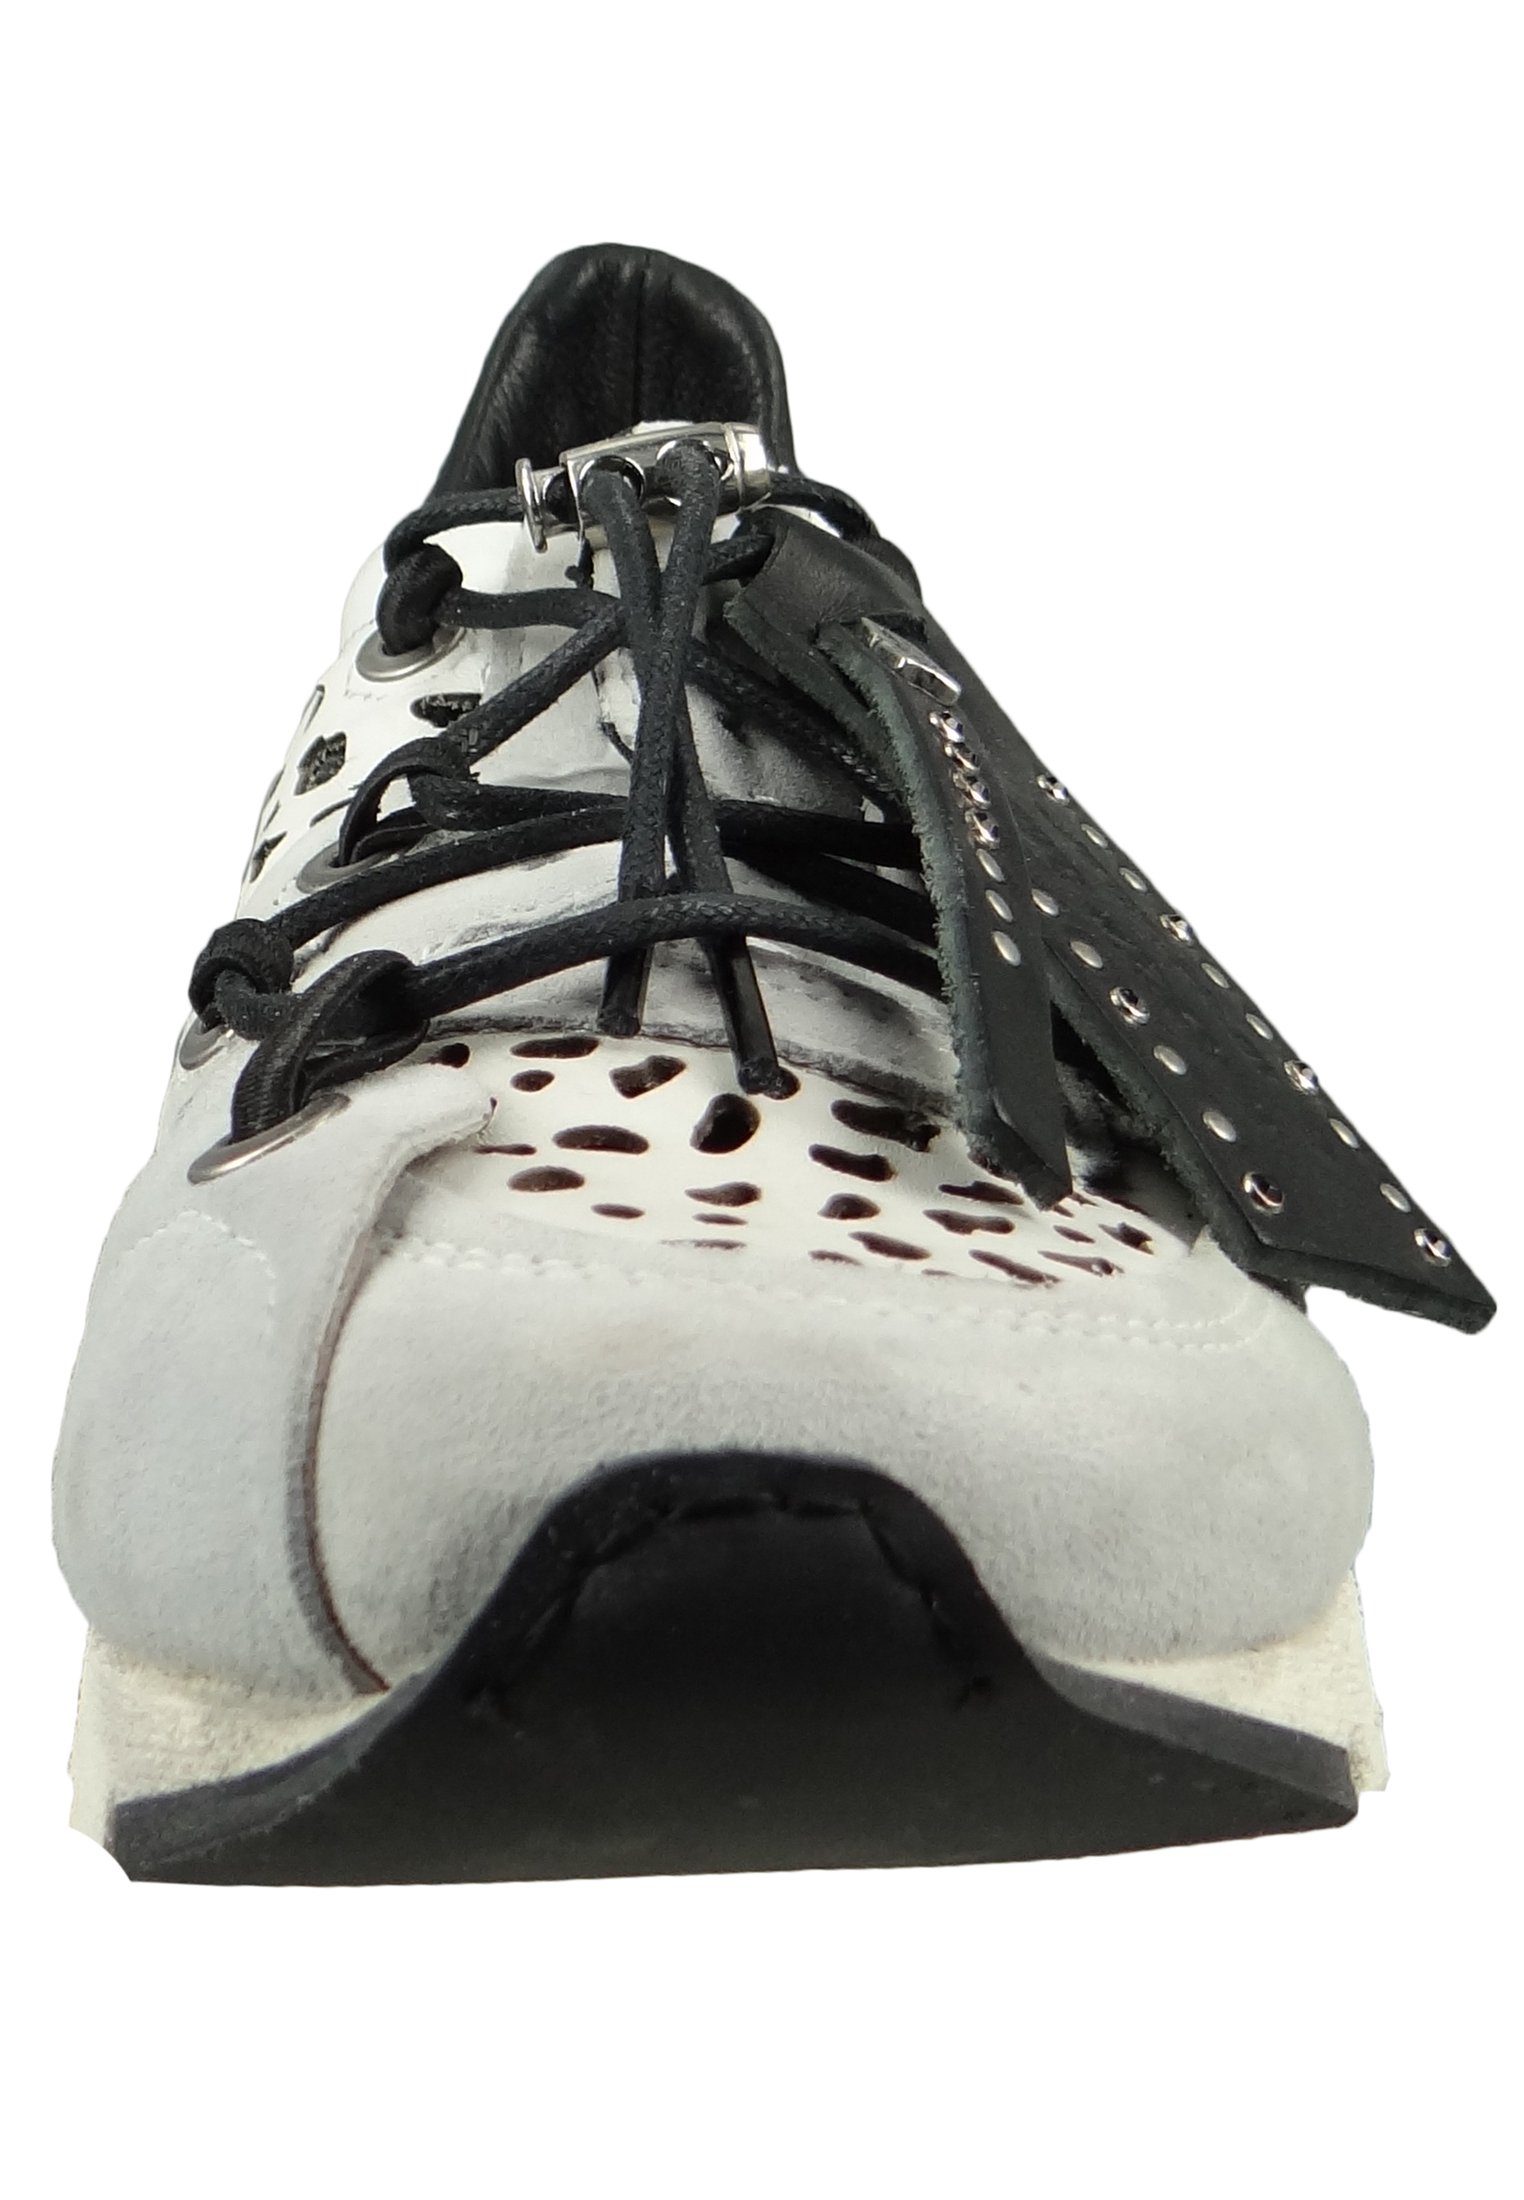 A13111-0101-0001 Denastar Bianco Sneaker A.S.98